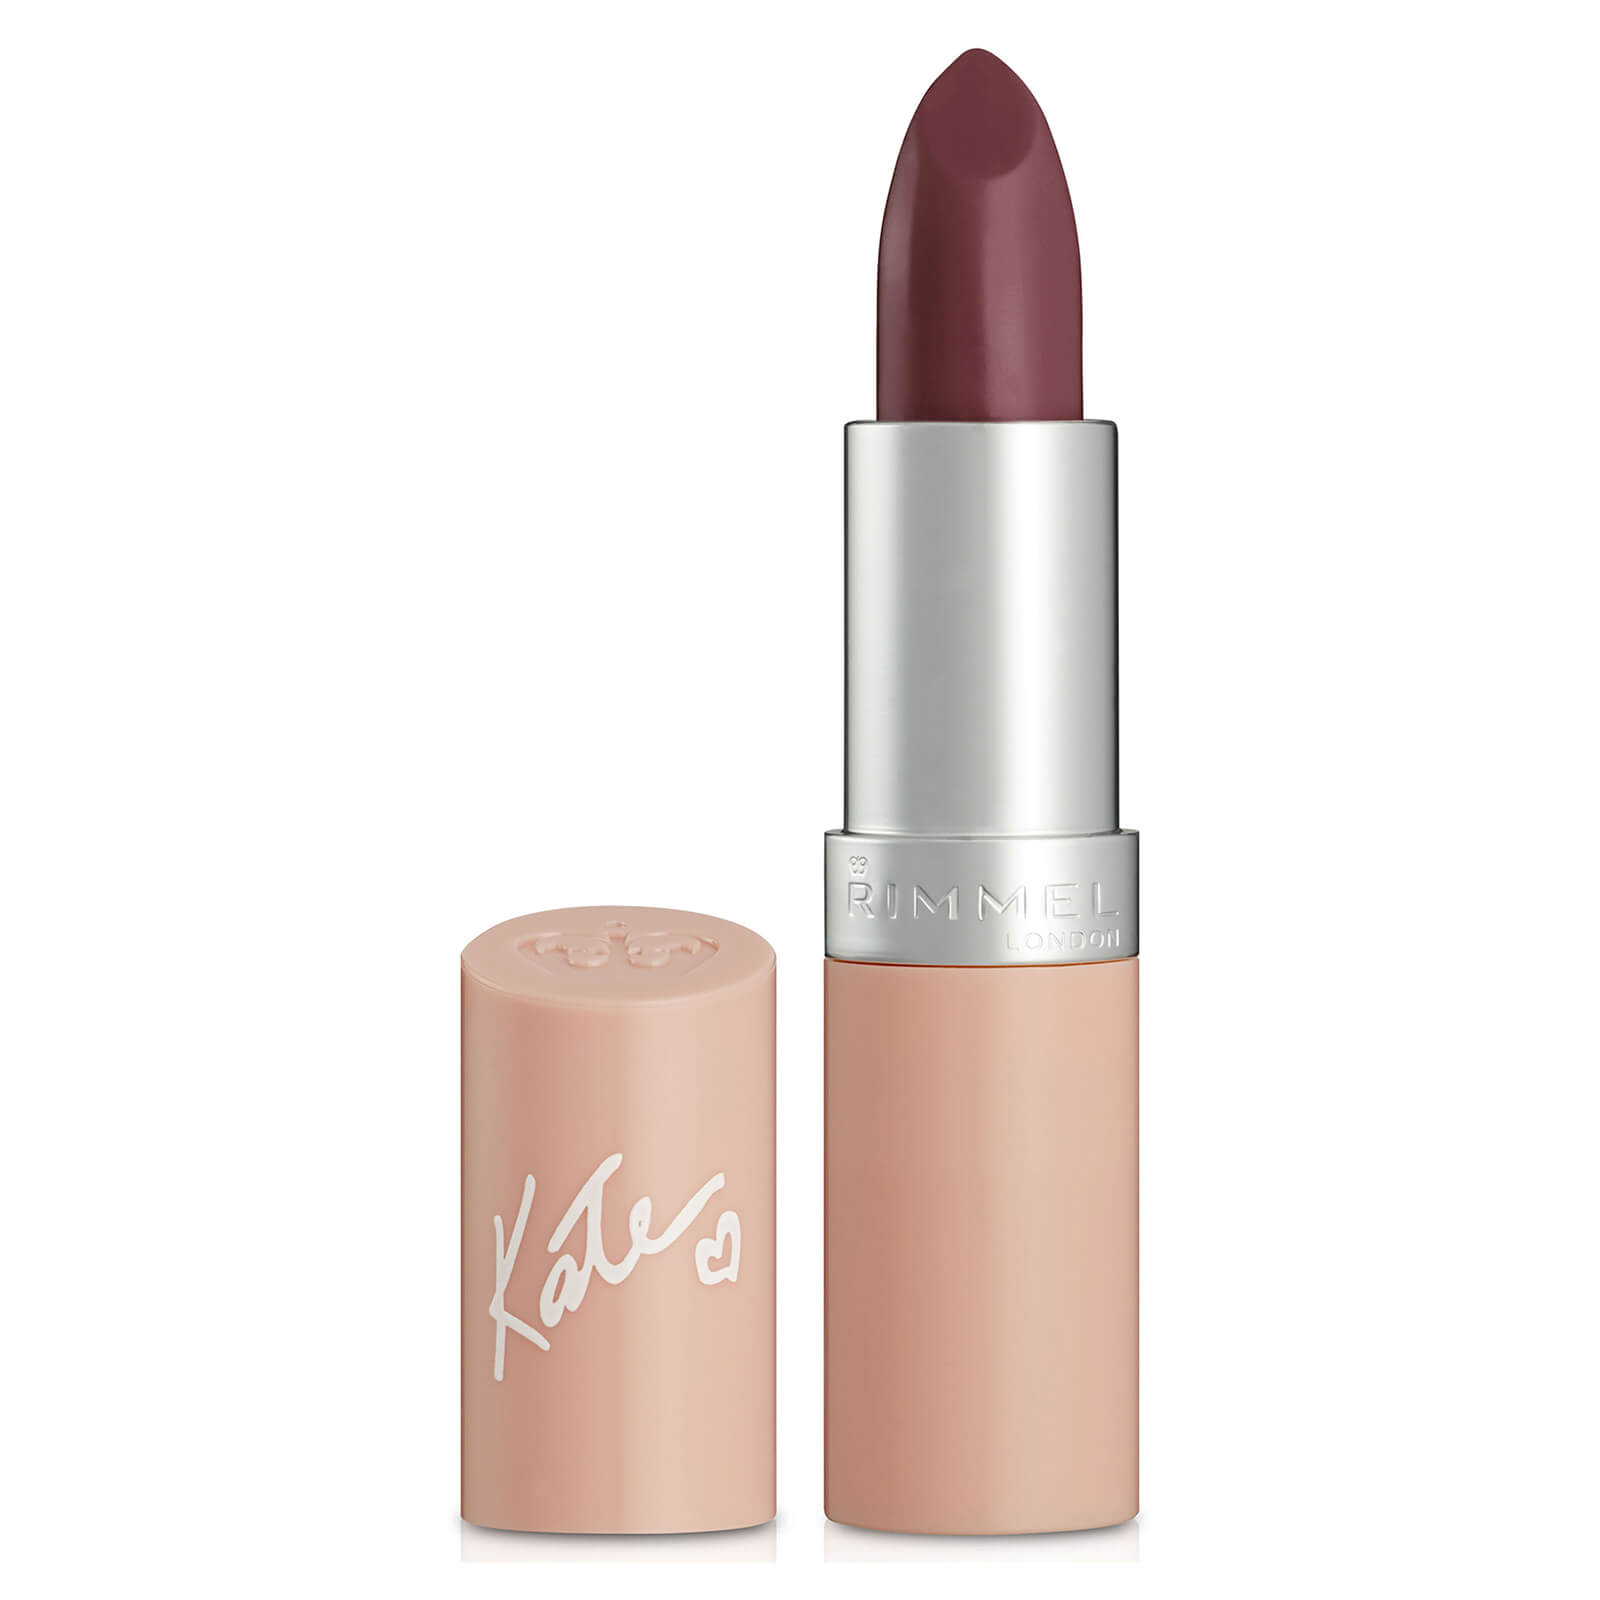 rimmel nudes lipstick (various shades) - 48